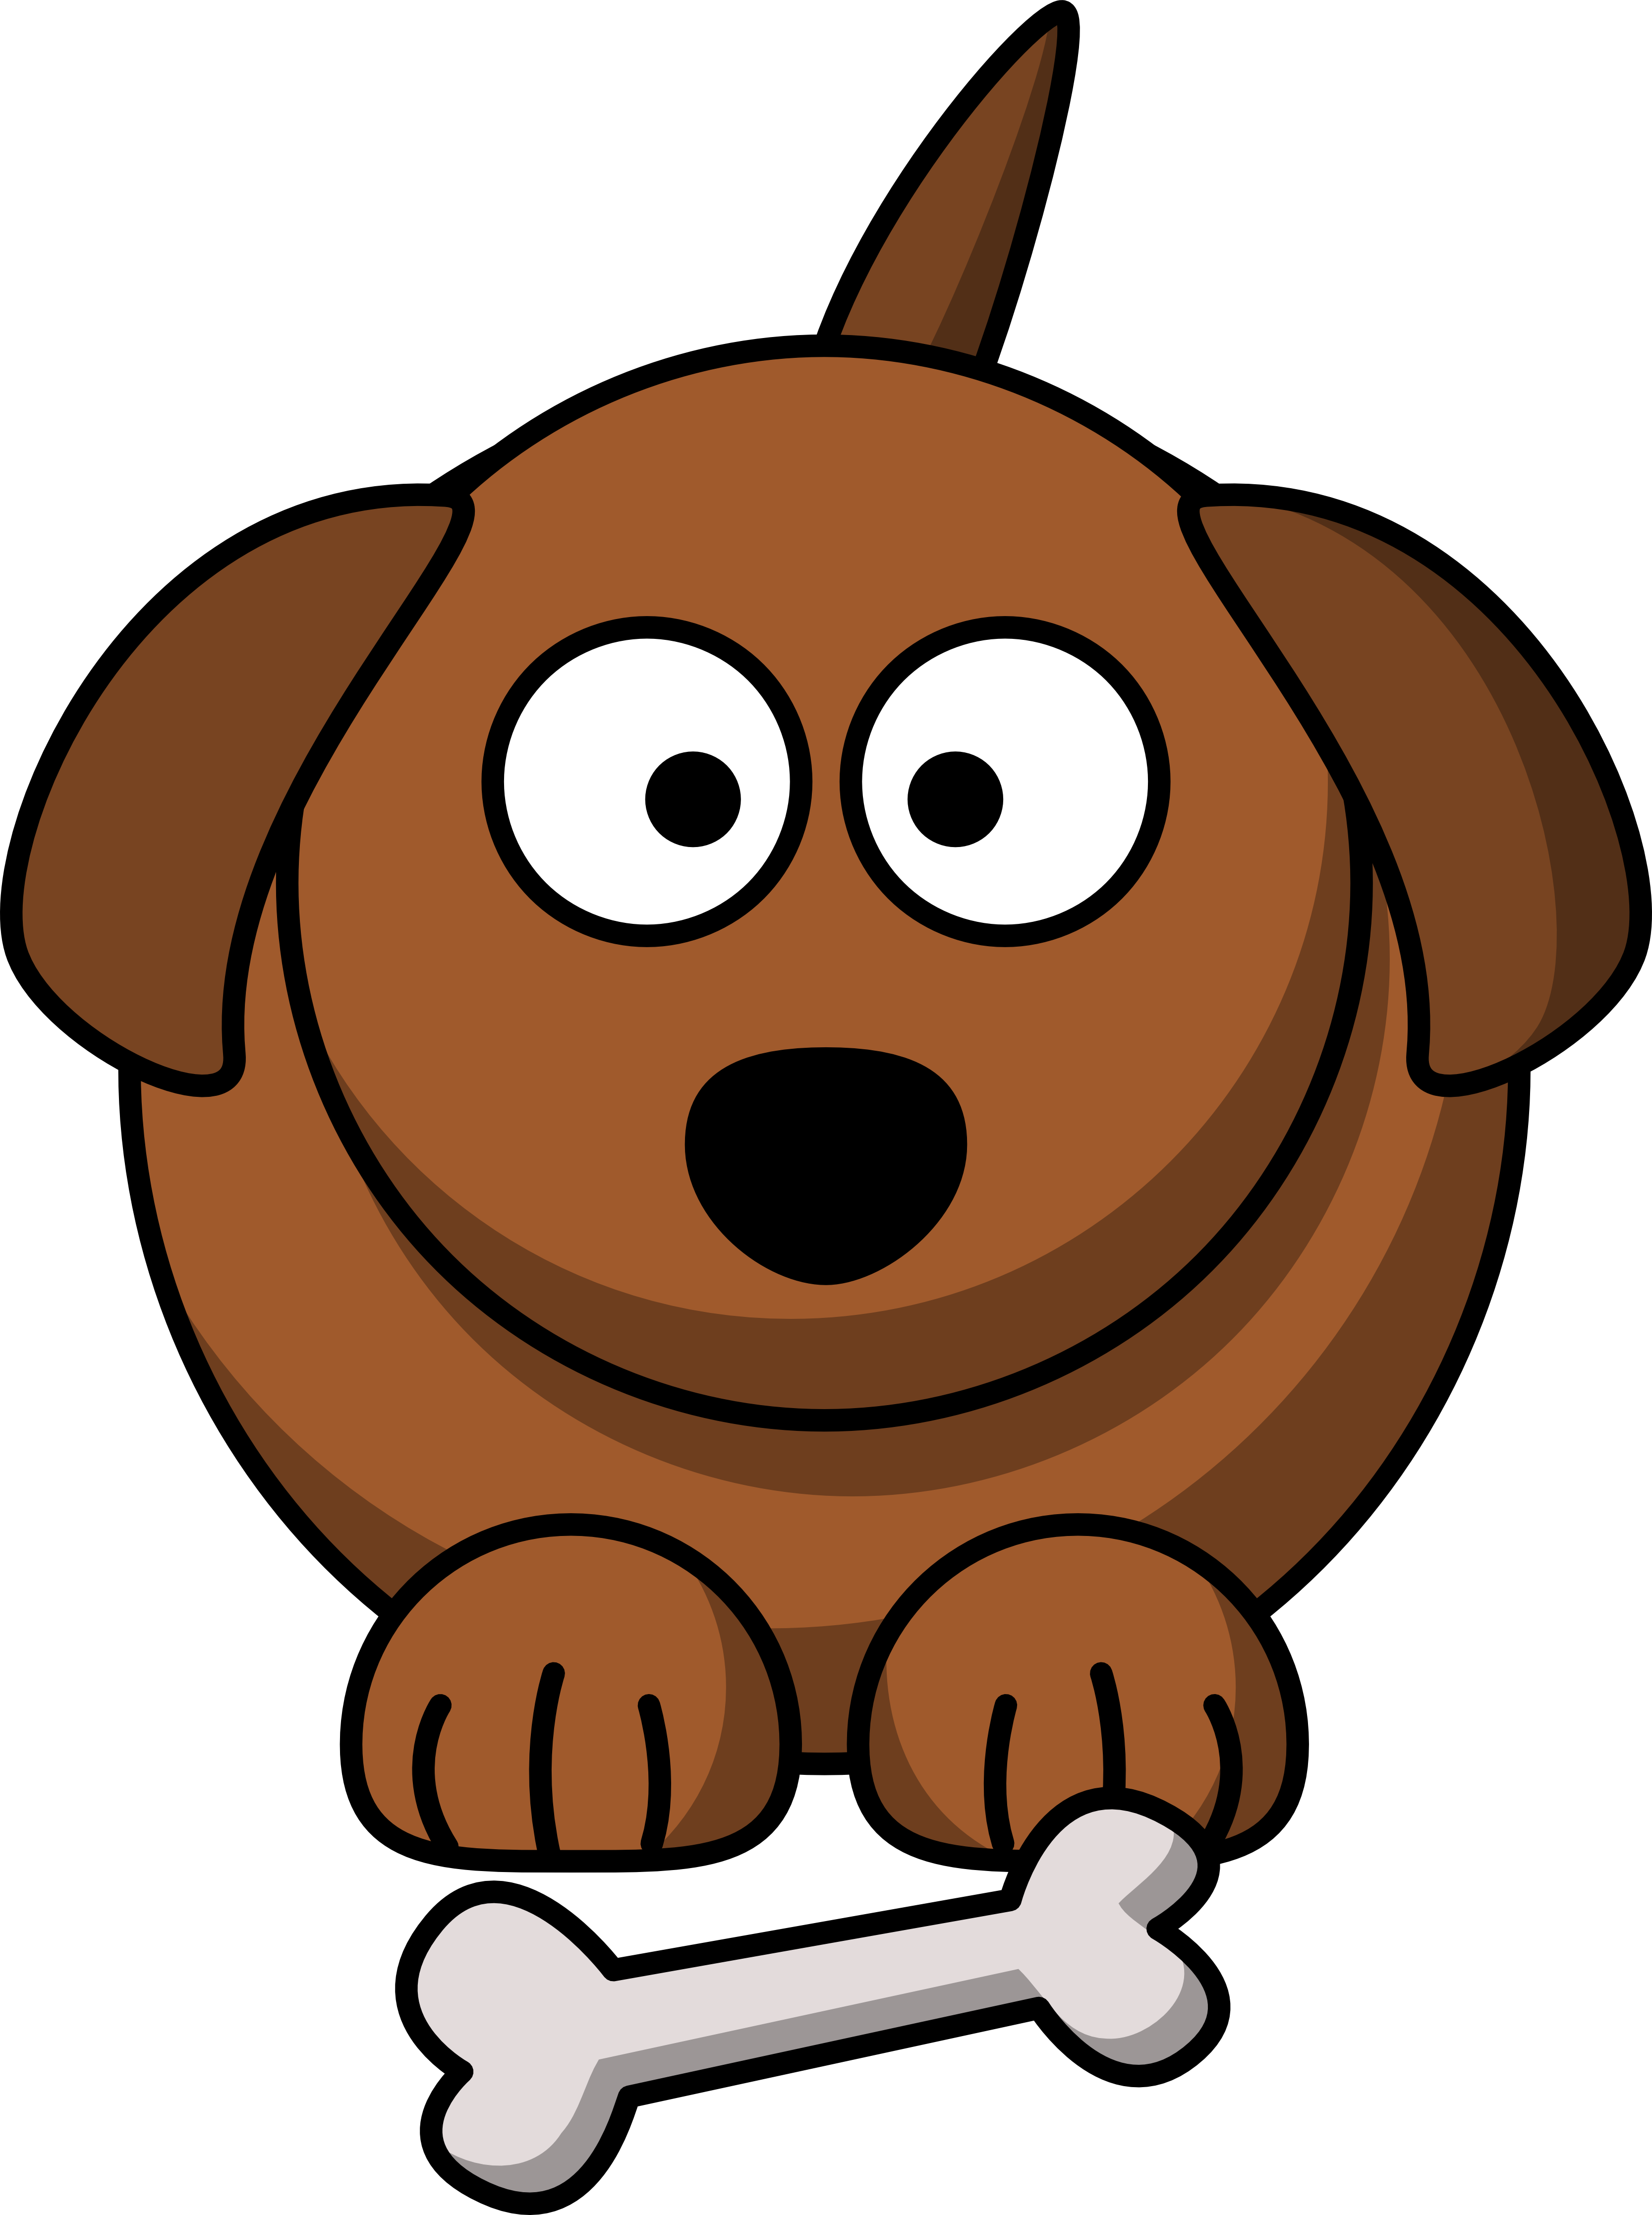 Xmas Stuff For Cute Cartoon Christmas Dogs - Cartoon Dog (3333x4469)